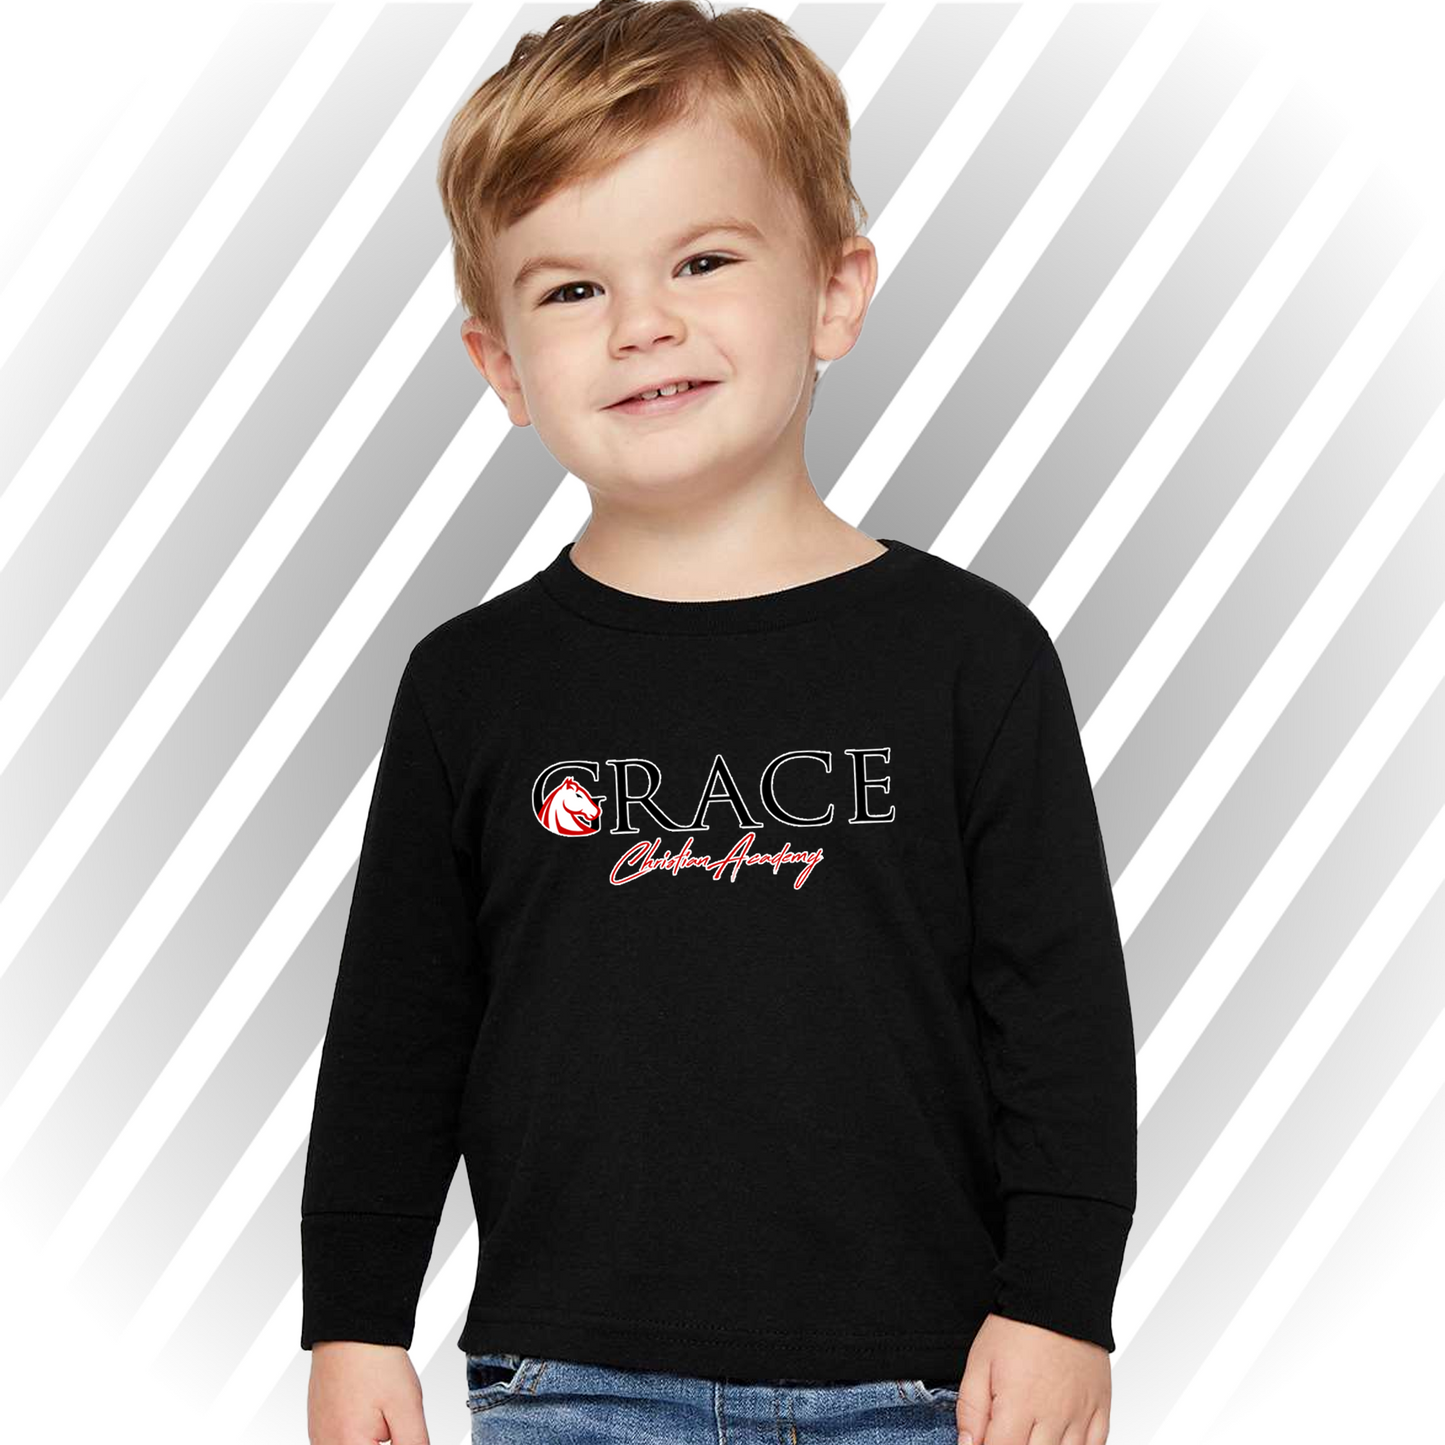 Grace Christian Academy - Toddler Long Sleeve